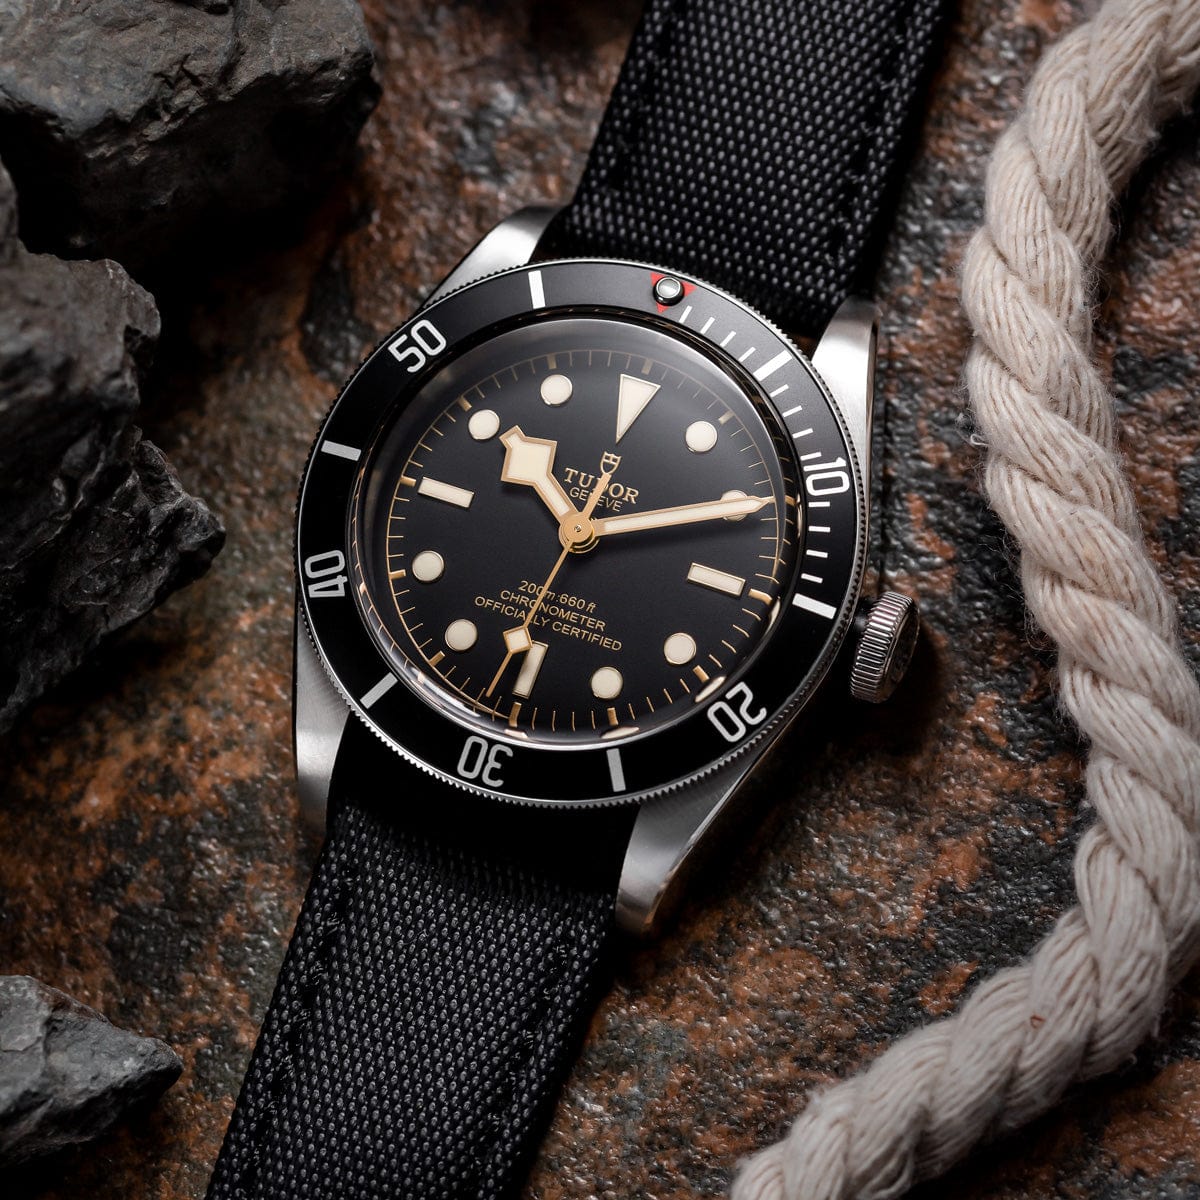 ZULUDIVER Maverick (MK II) Sailcloth Waterproof Watch Strap - Black / Black